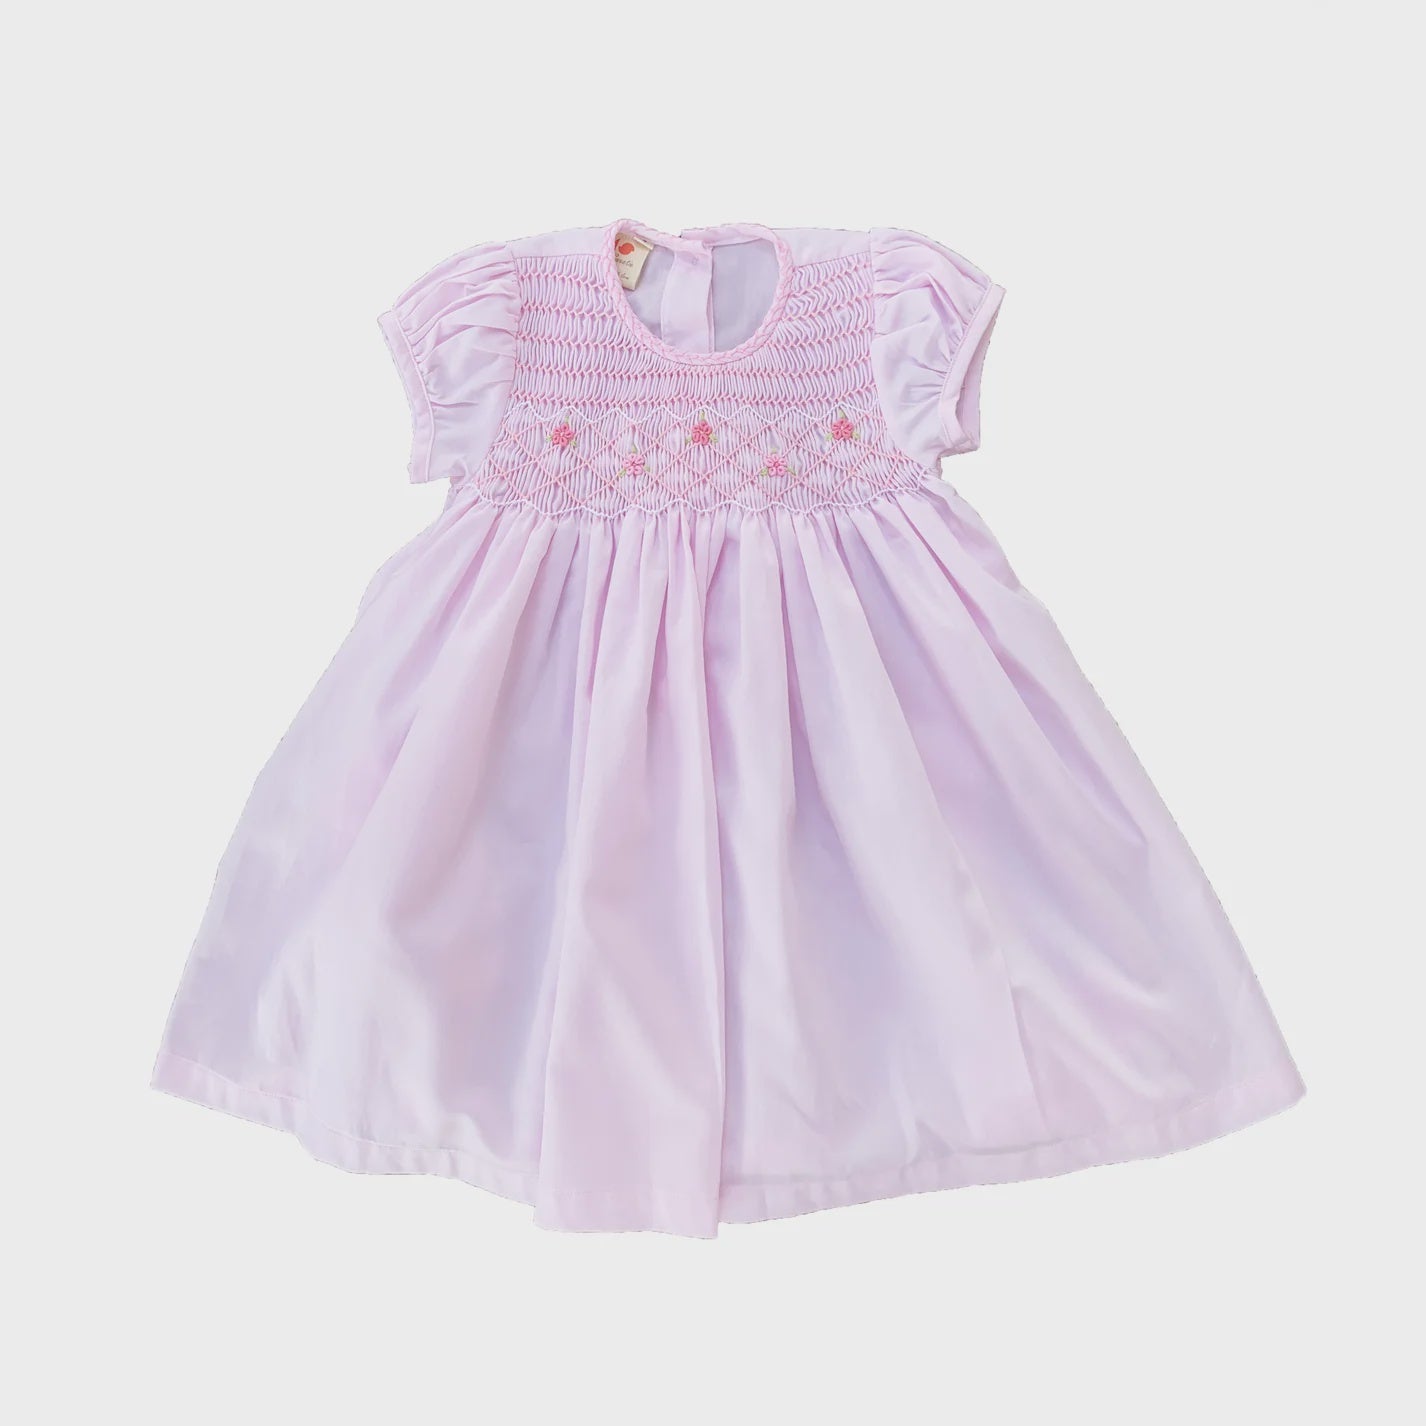 Pale Pink Smocked Dress Size 2